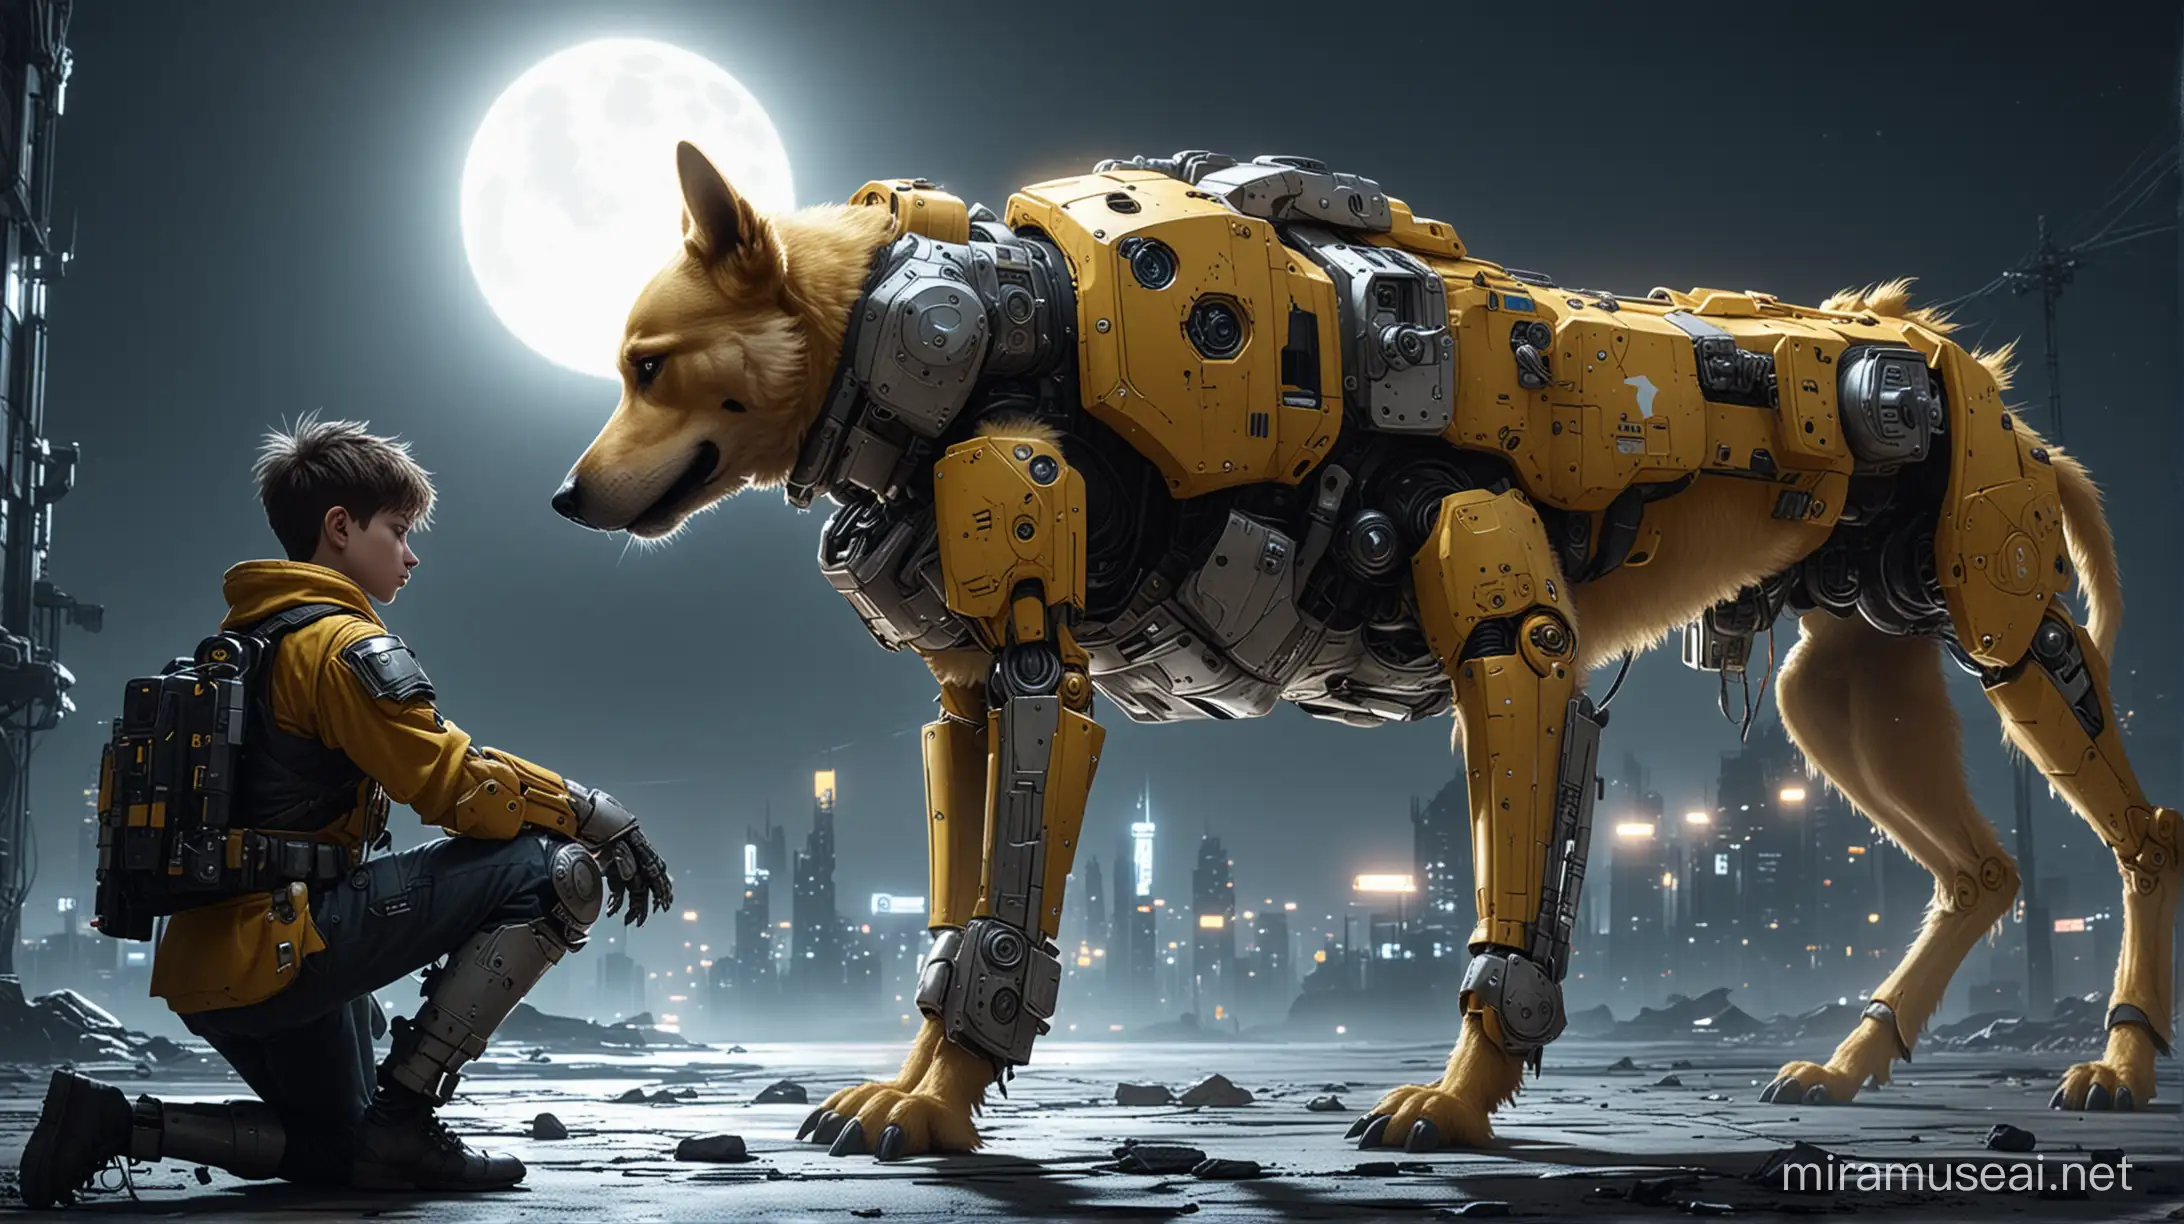 Teenage Boy in Mech Armor Petting Yellow Dog Under Moonlight in Cyberpunk City